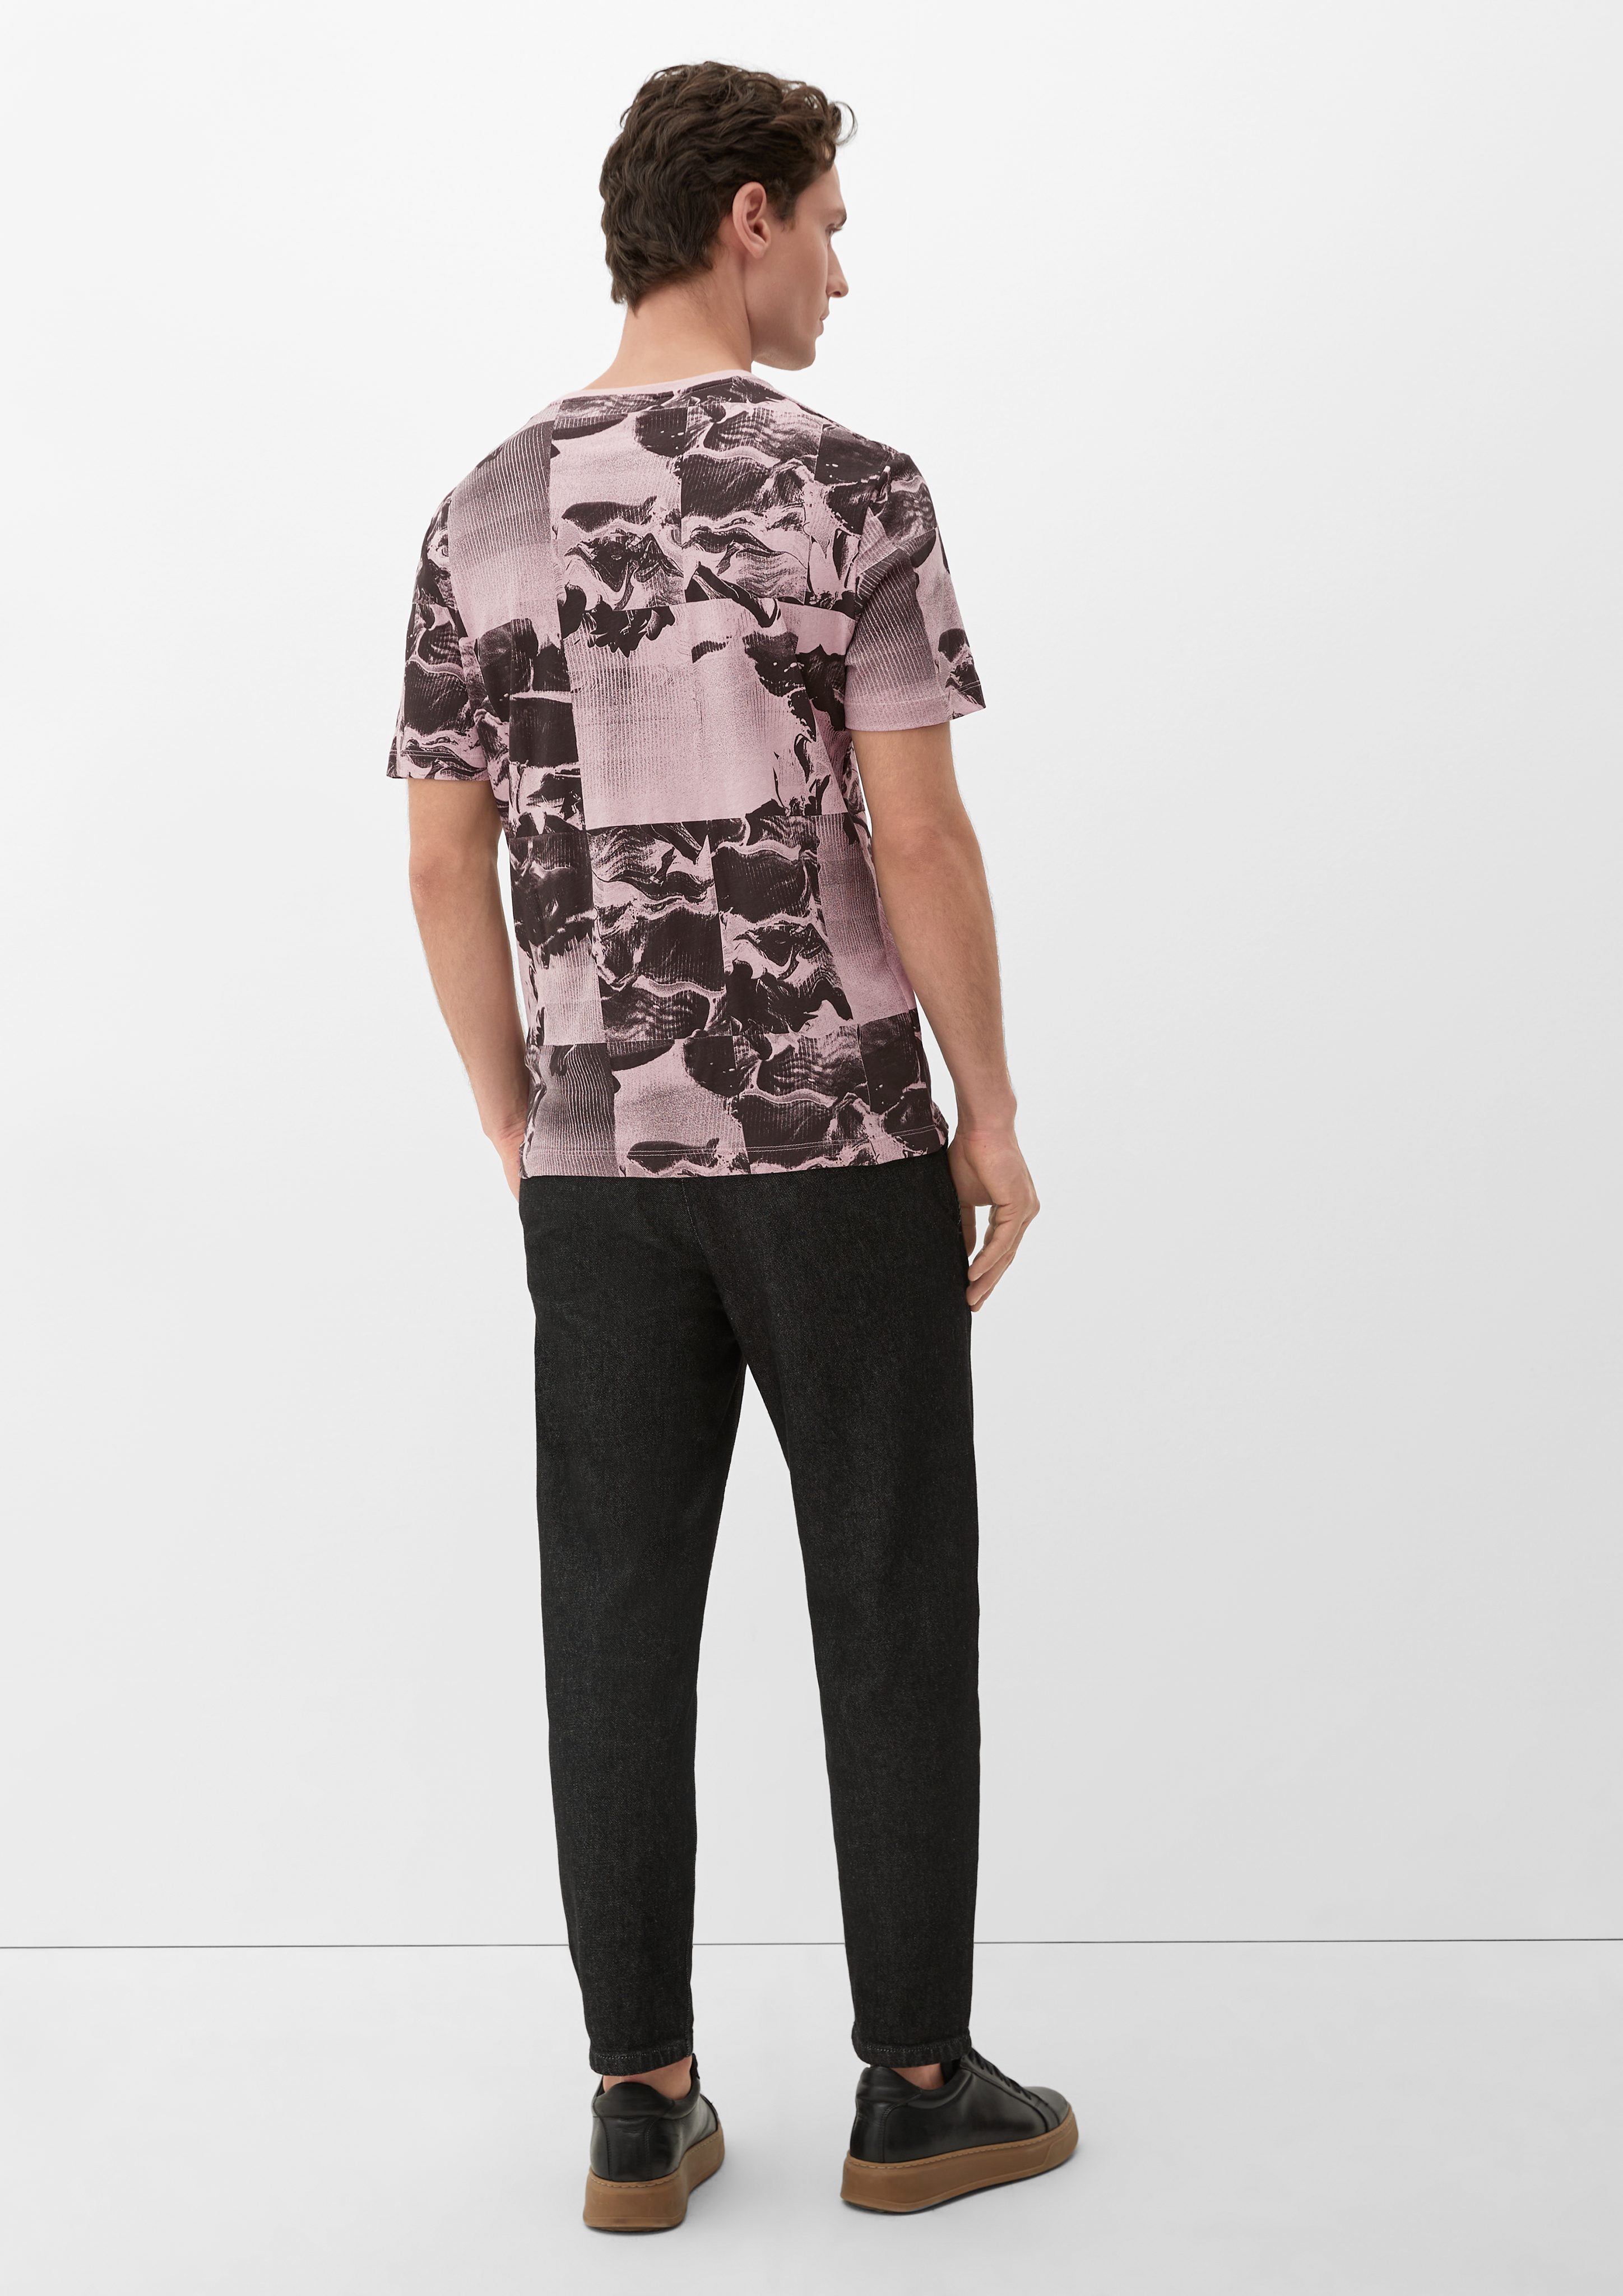 Kurzarmshirt mit Alloverprint rosa s.Oliver T-Shirt